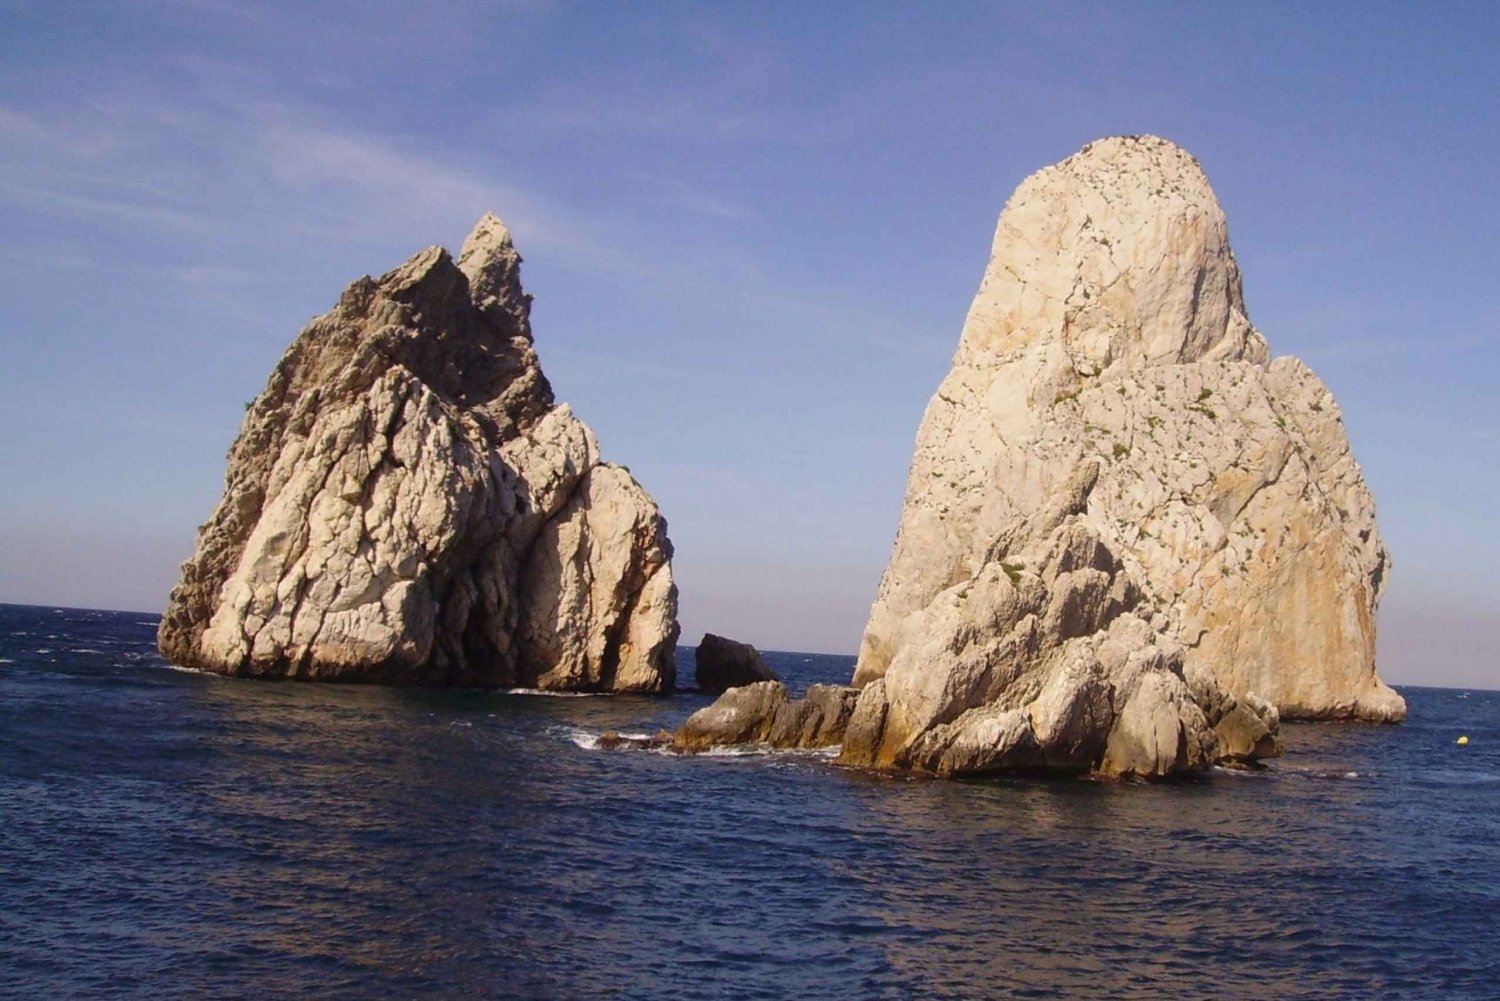 De Roses: Passeio de barco pelas Ilhas Medes com visita a El Estartit